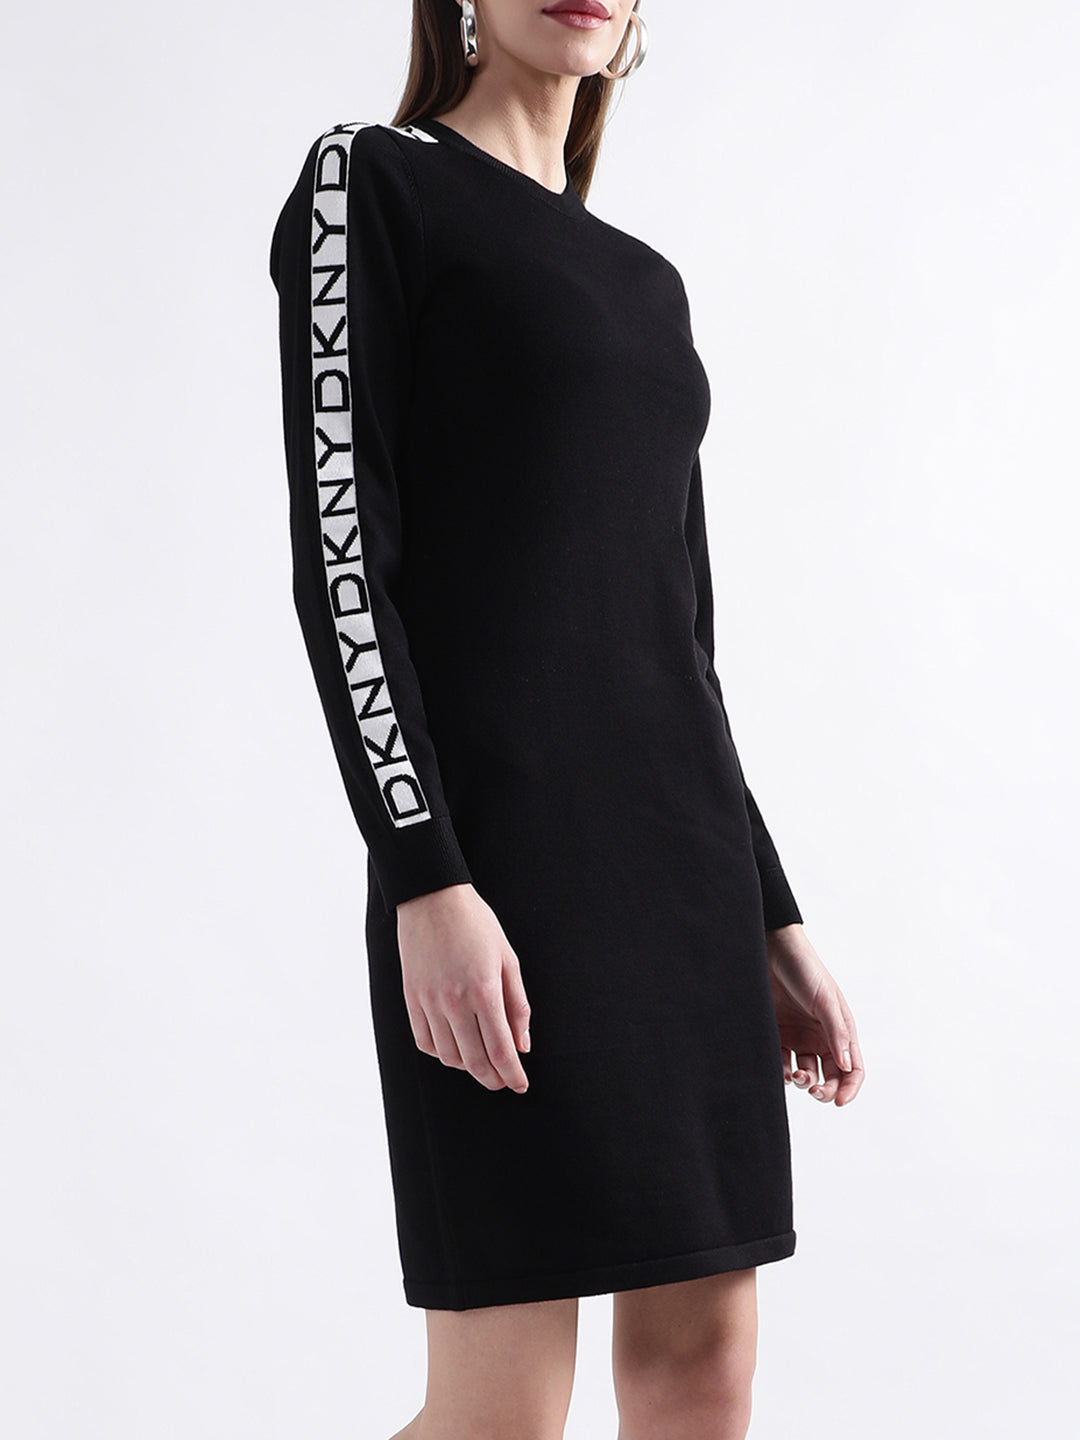 DKNY Women Black Dress